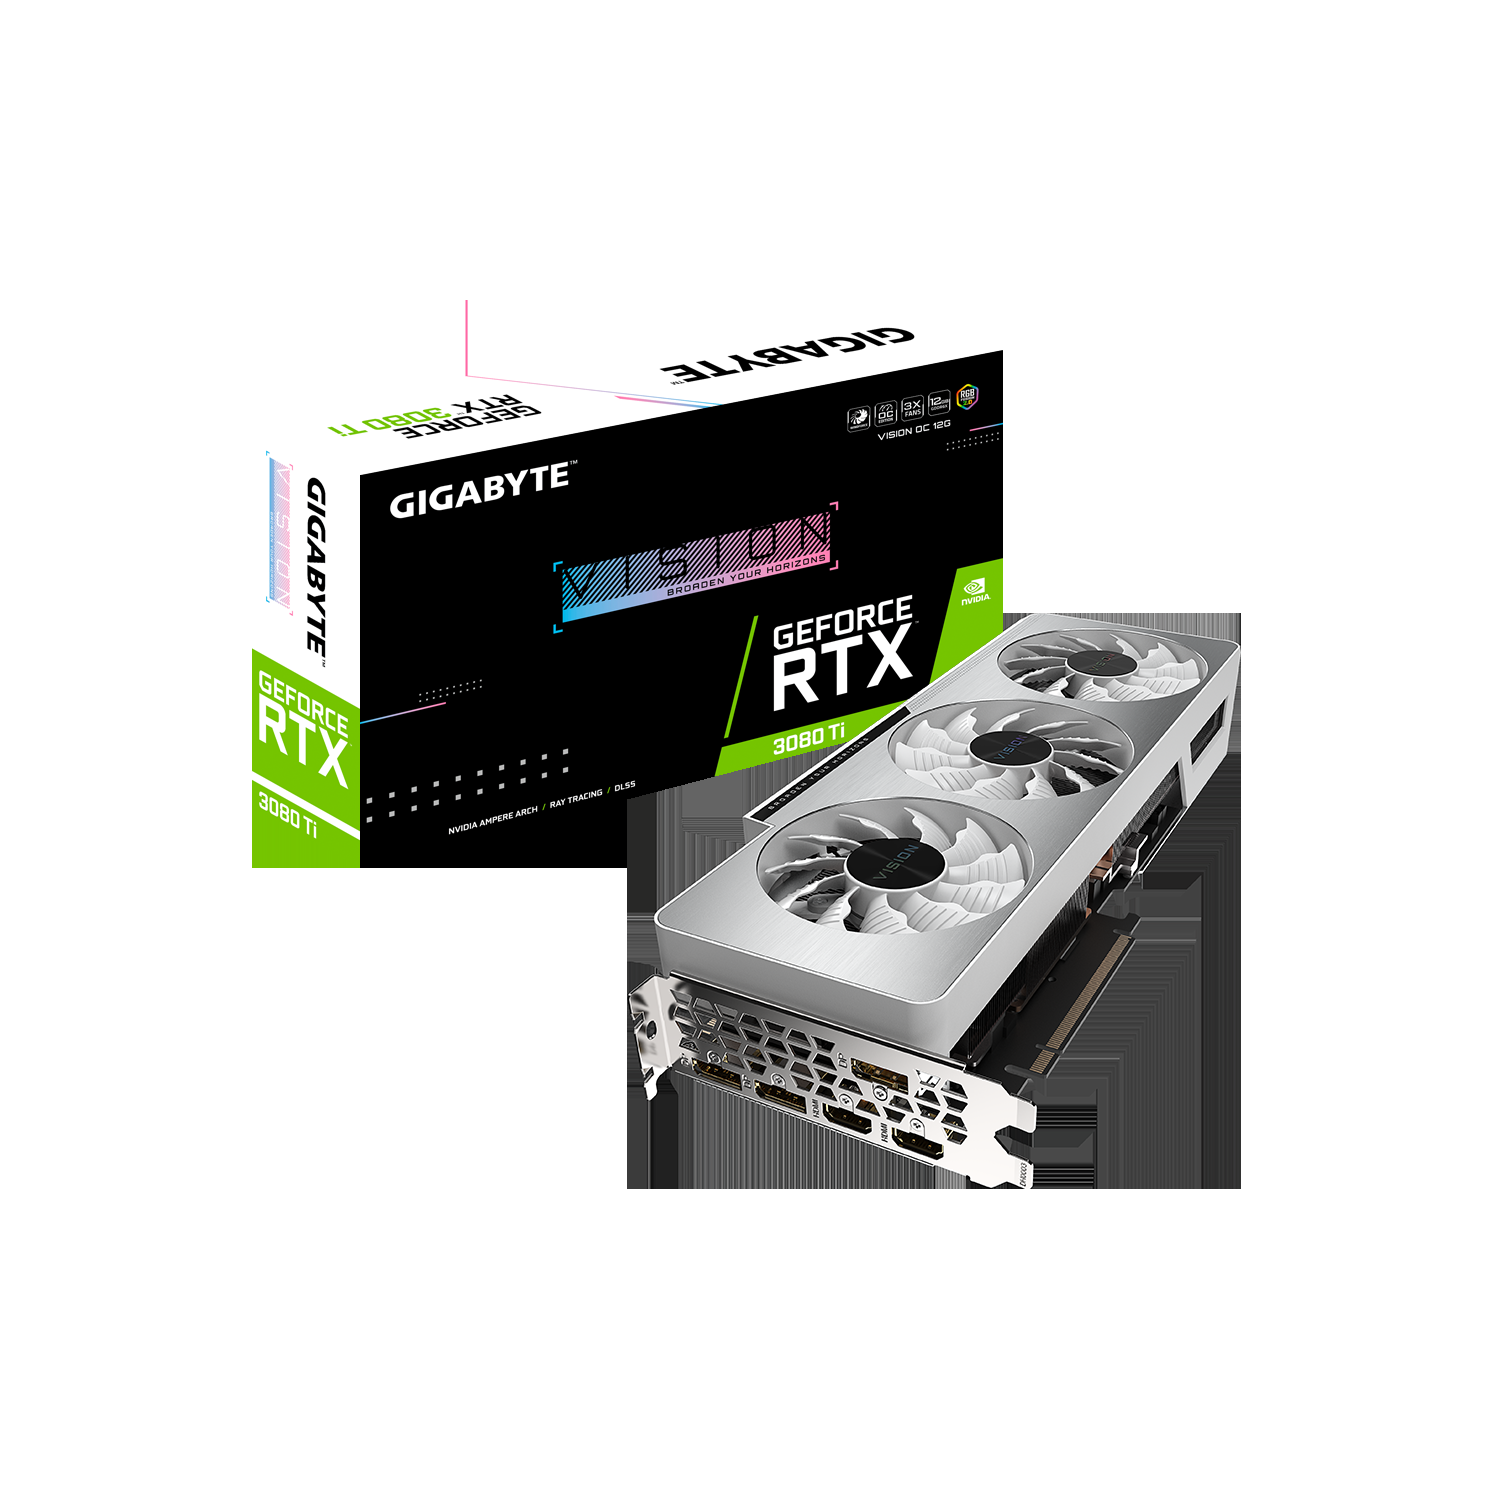 GIGABYTE Vision GeForce RTX 3080 Ti 12GB GDDR6X PCI Express 4.0 x16 ATX Video Card GV-N308TVISION OC-12GD